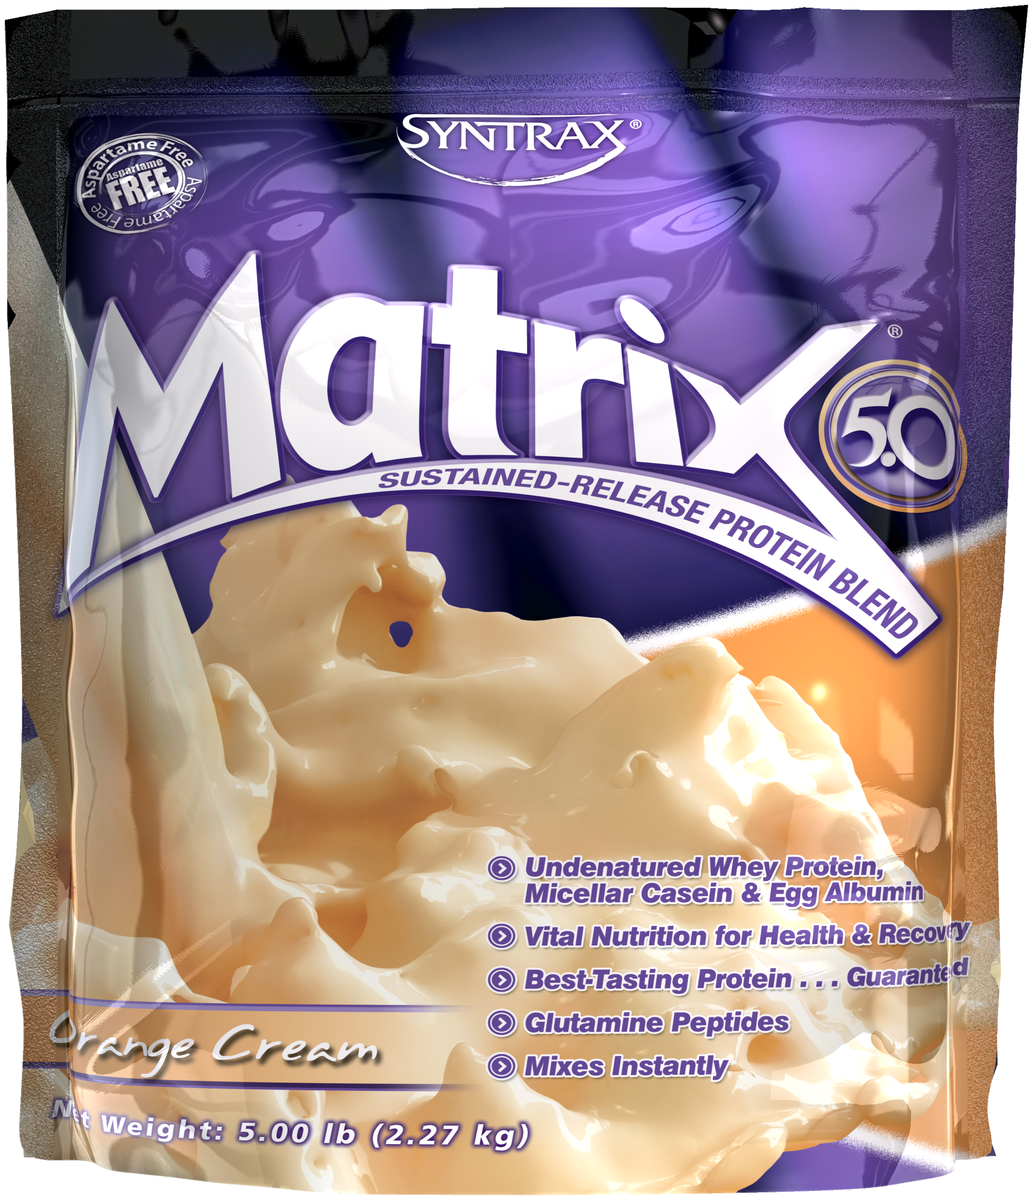 Syntrax matrix